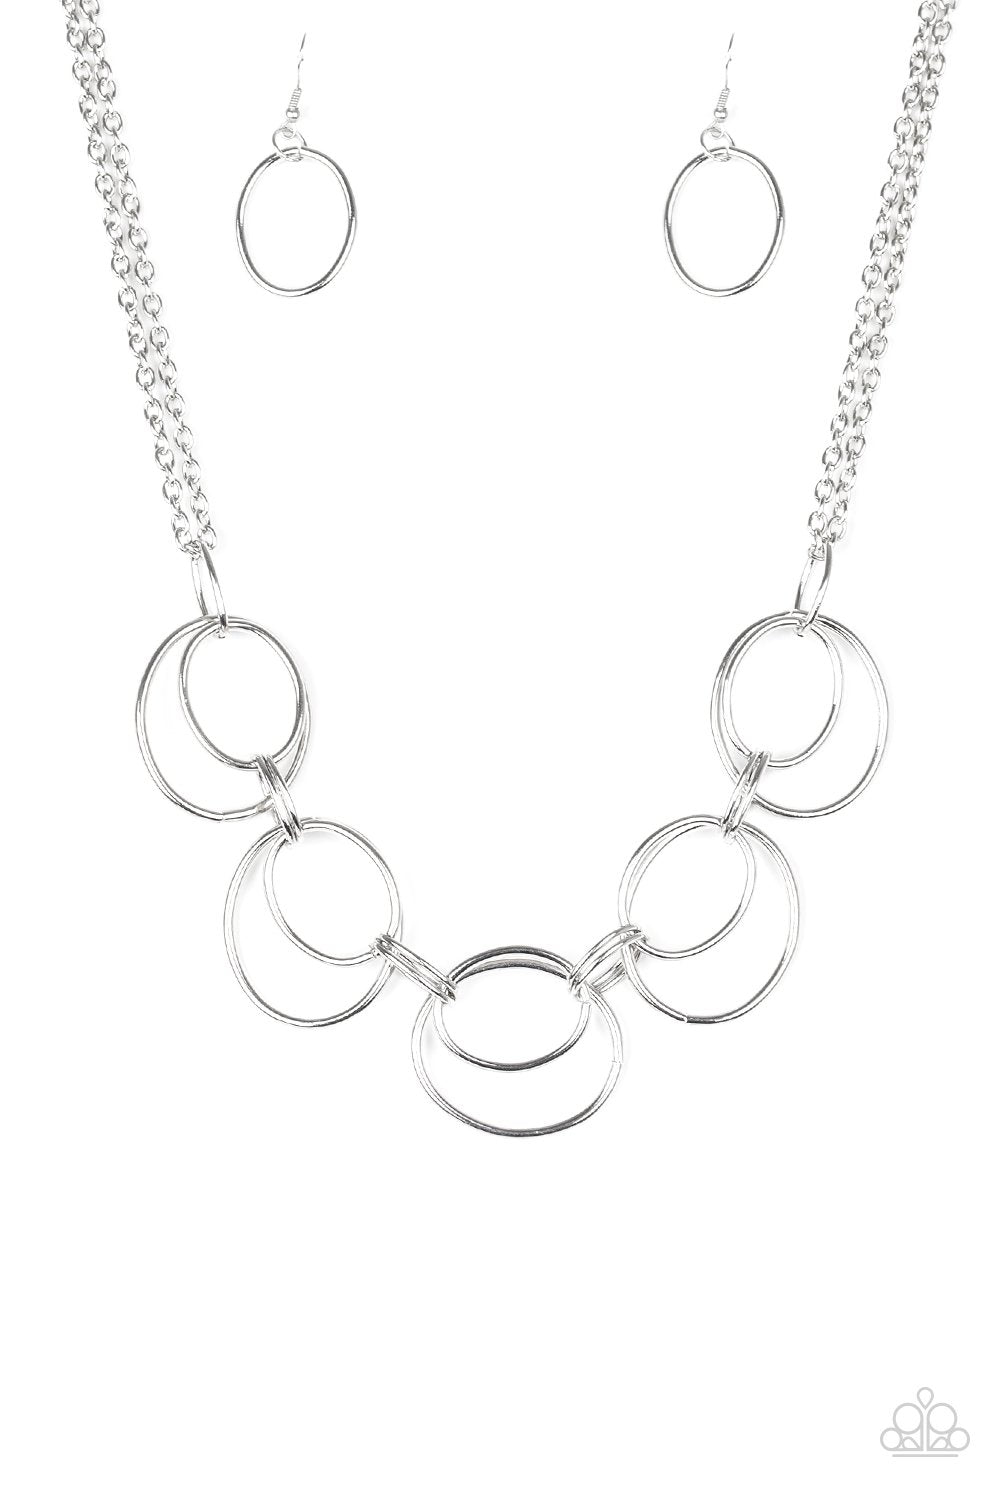 Urban Orbit Silver Necklace - Paparazzi Accessories - lightbox -CarasShop.com - $5 Jewelry by Cara Jewels